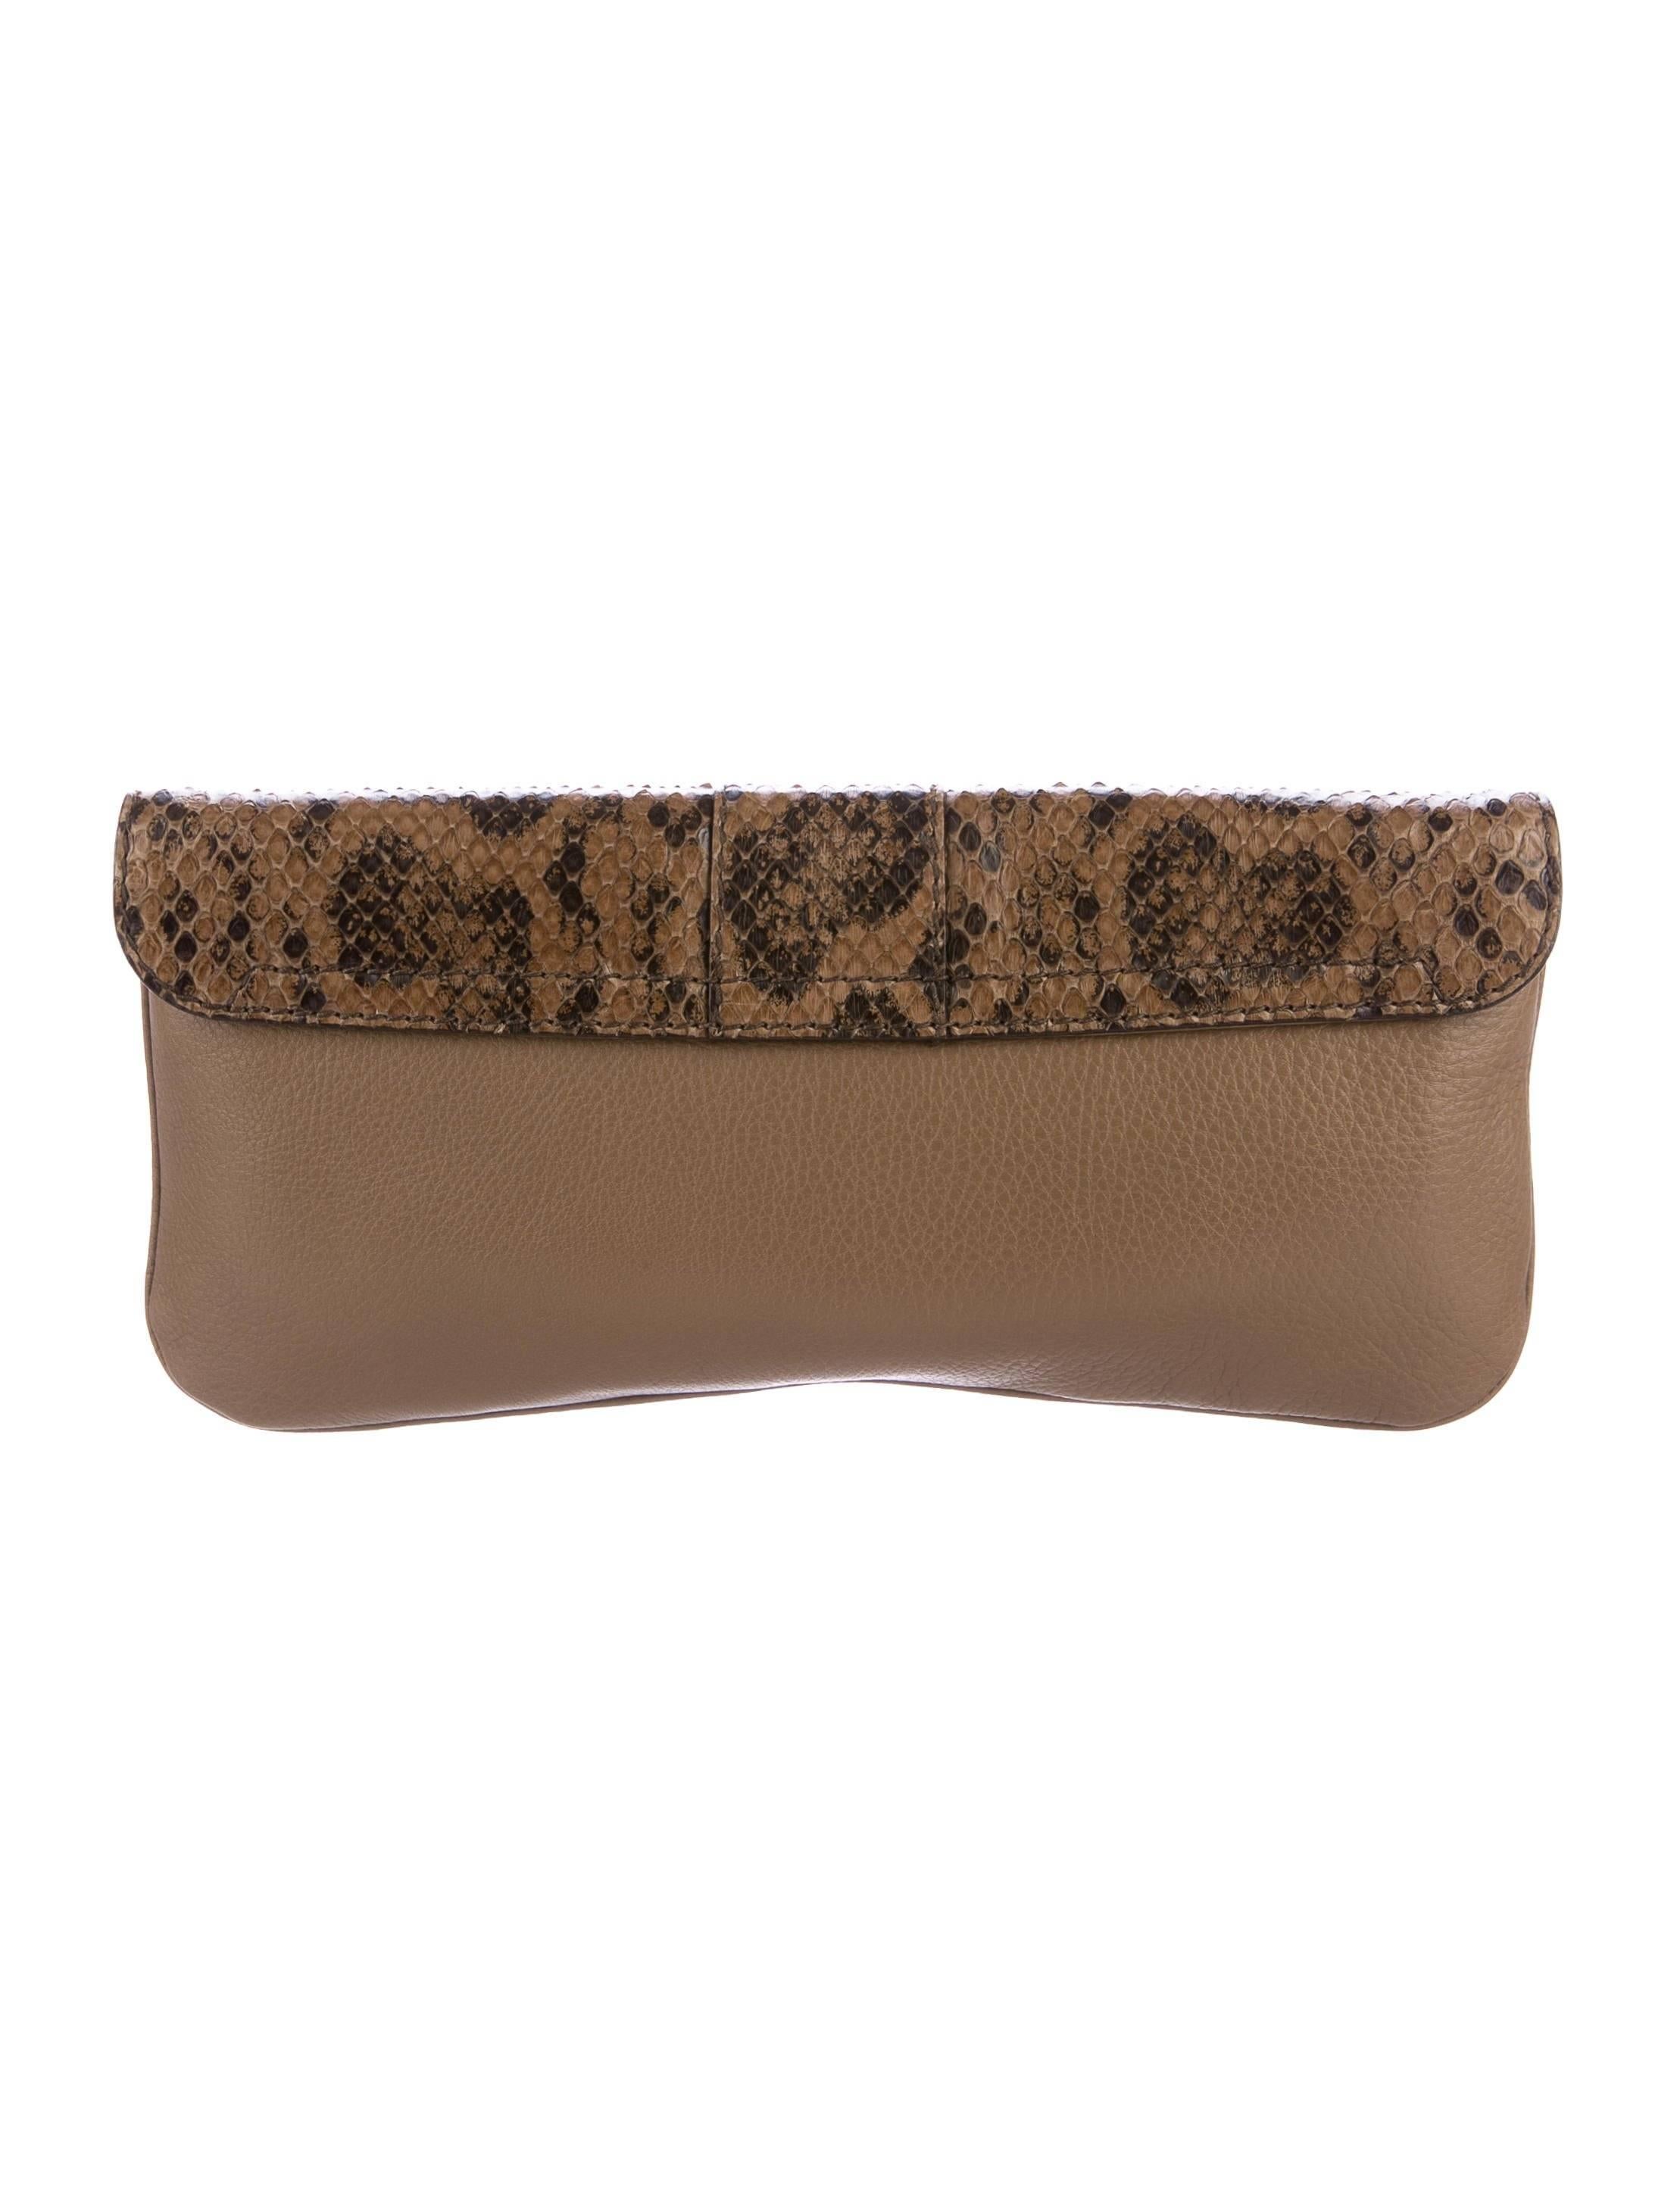 Women's Gucci Taupe Snakeskin Leather Gold Horsebit Evening Envelope Flap Clutch Bag